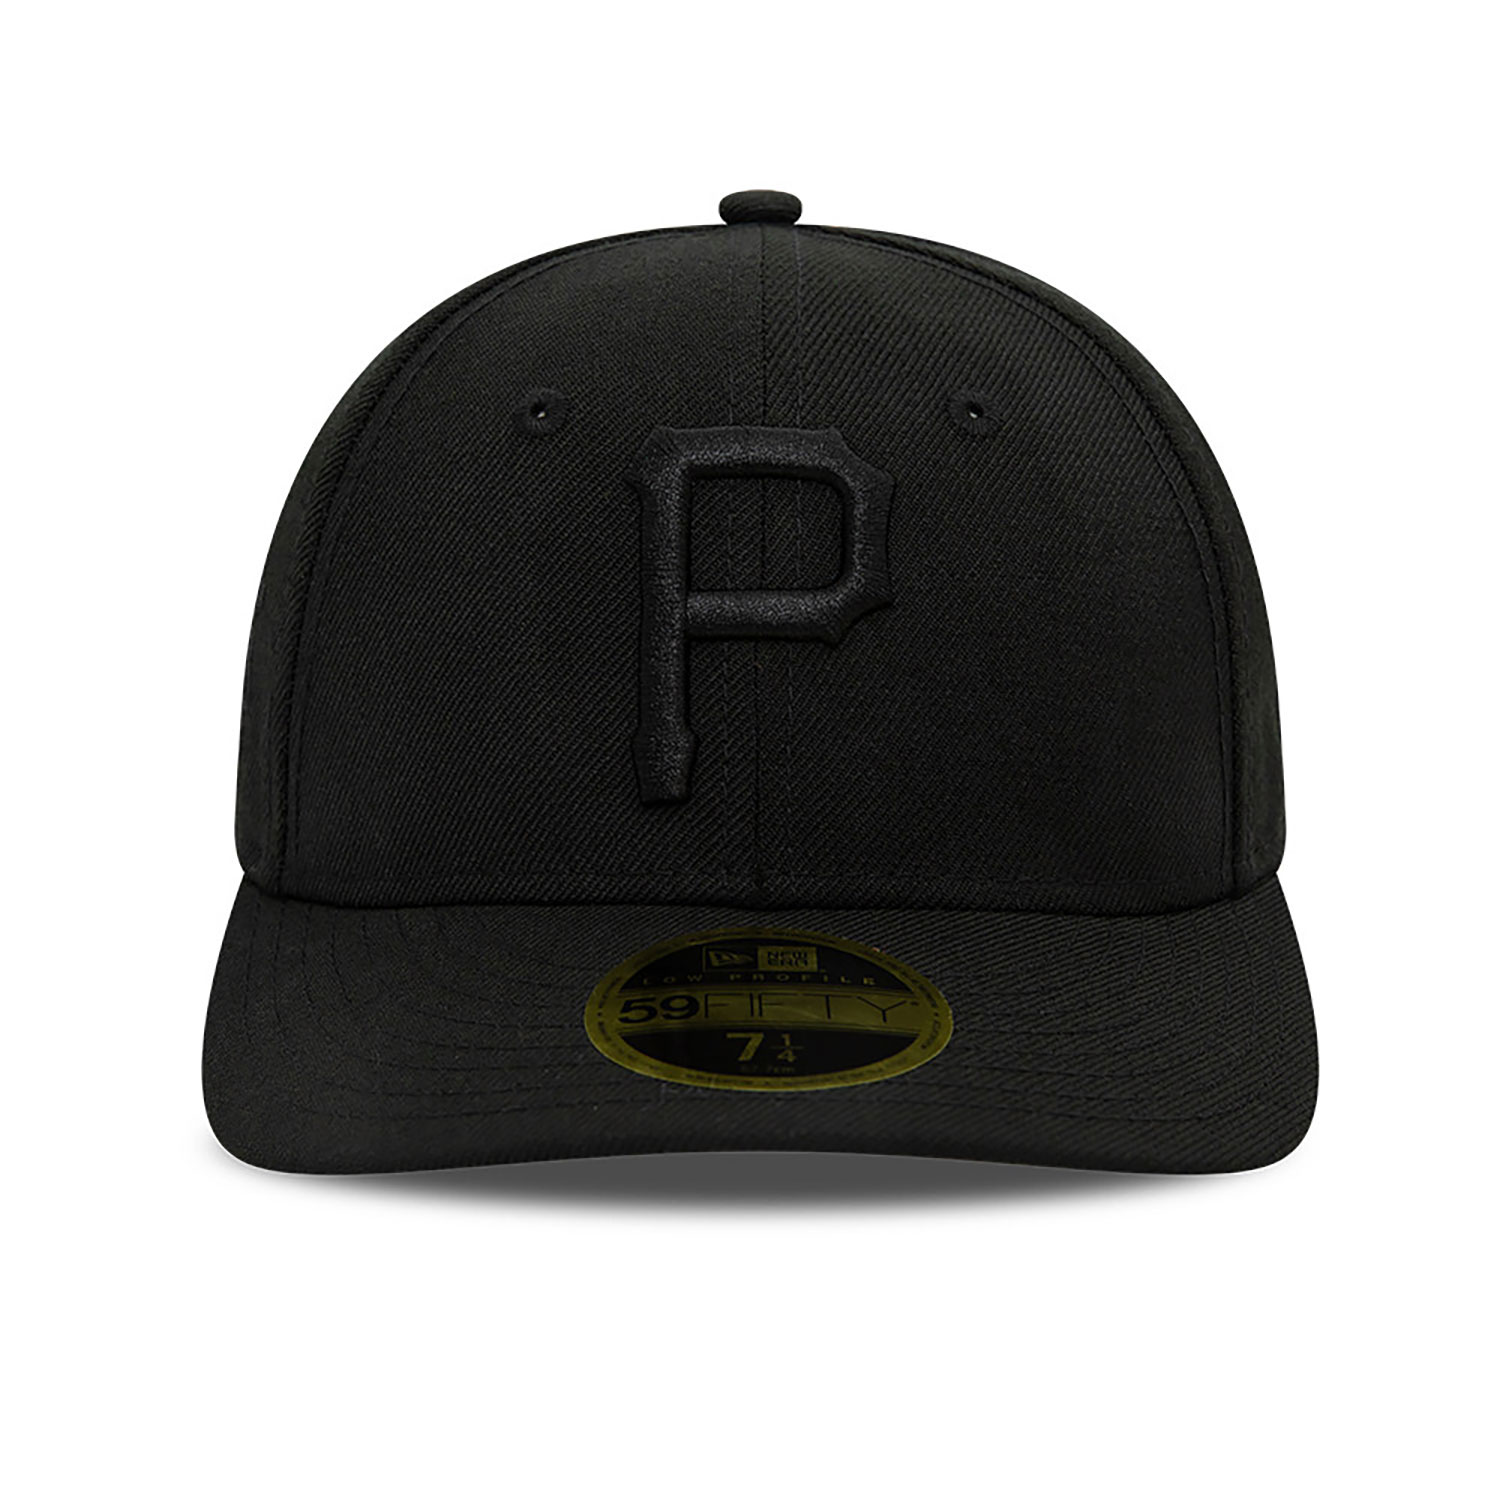 Pittsburgh Pirates MLB Black On Black 59FIFTY Low Profile Cap